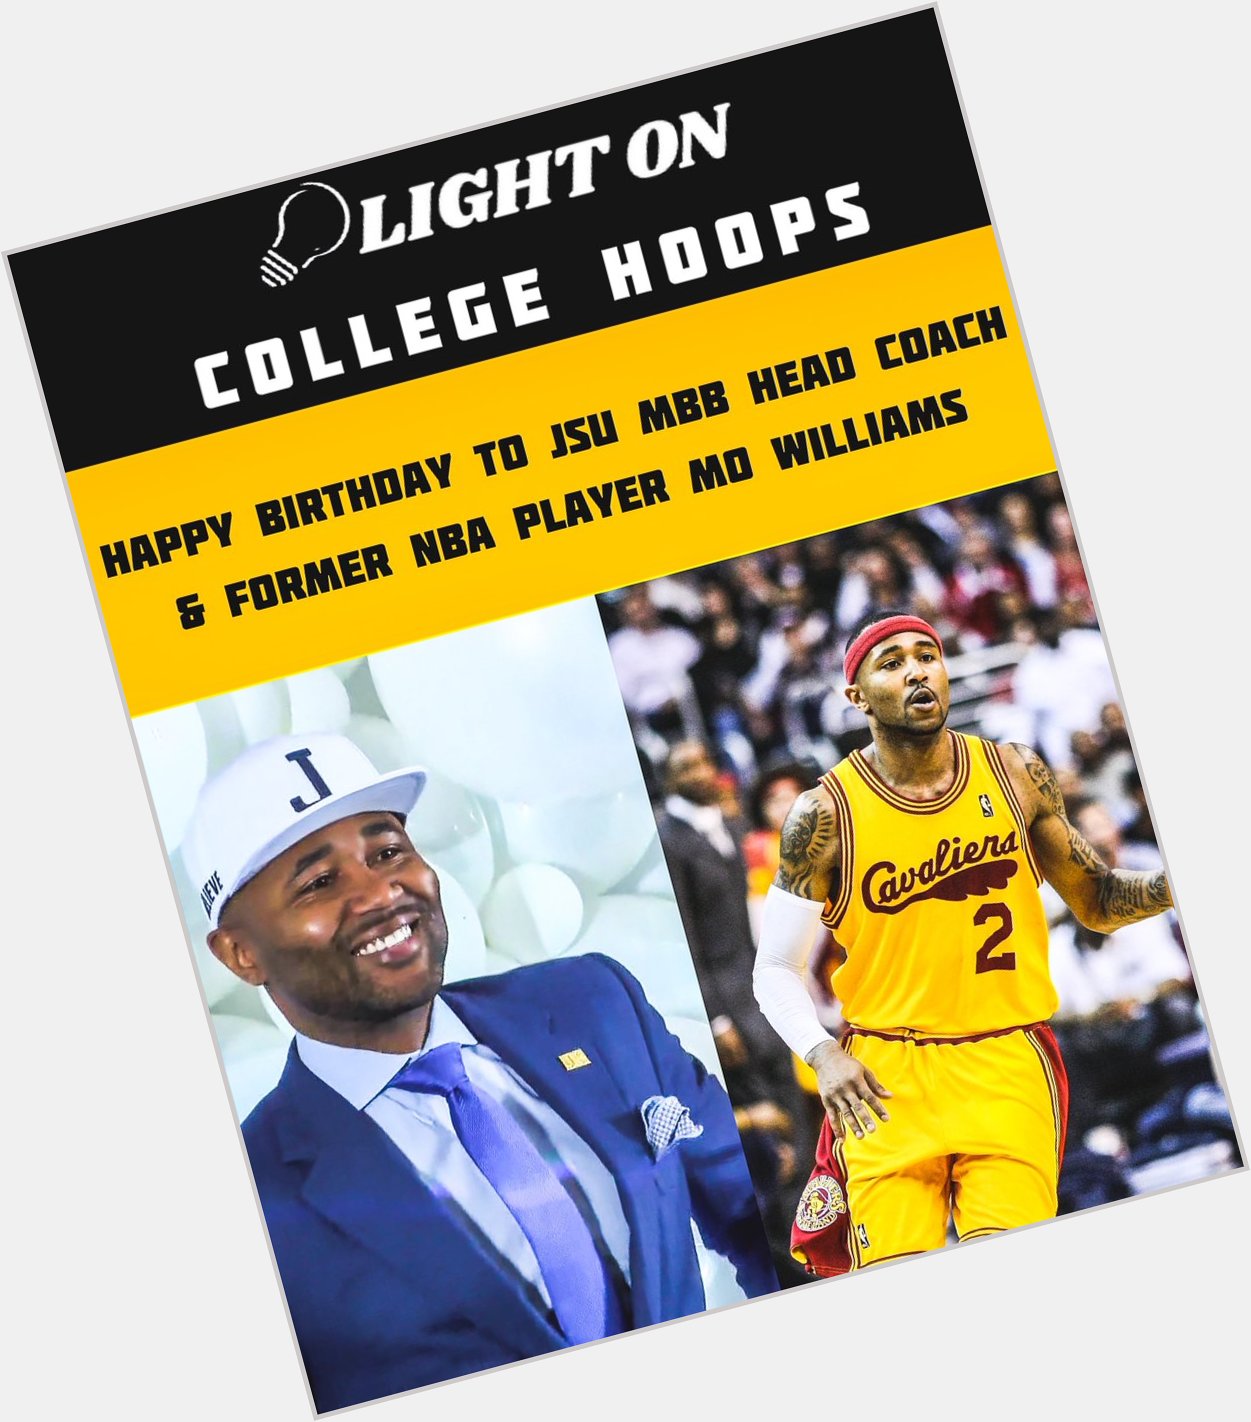 Happy Birthday To Jackson State Men s Basketball Head Coach & Former NBA Player Mo Williams! 